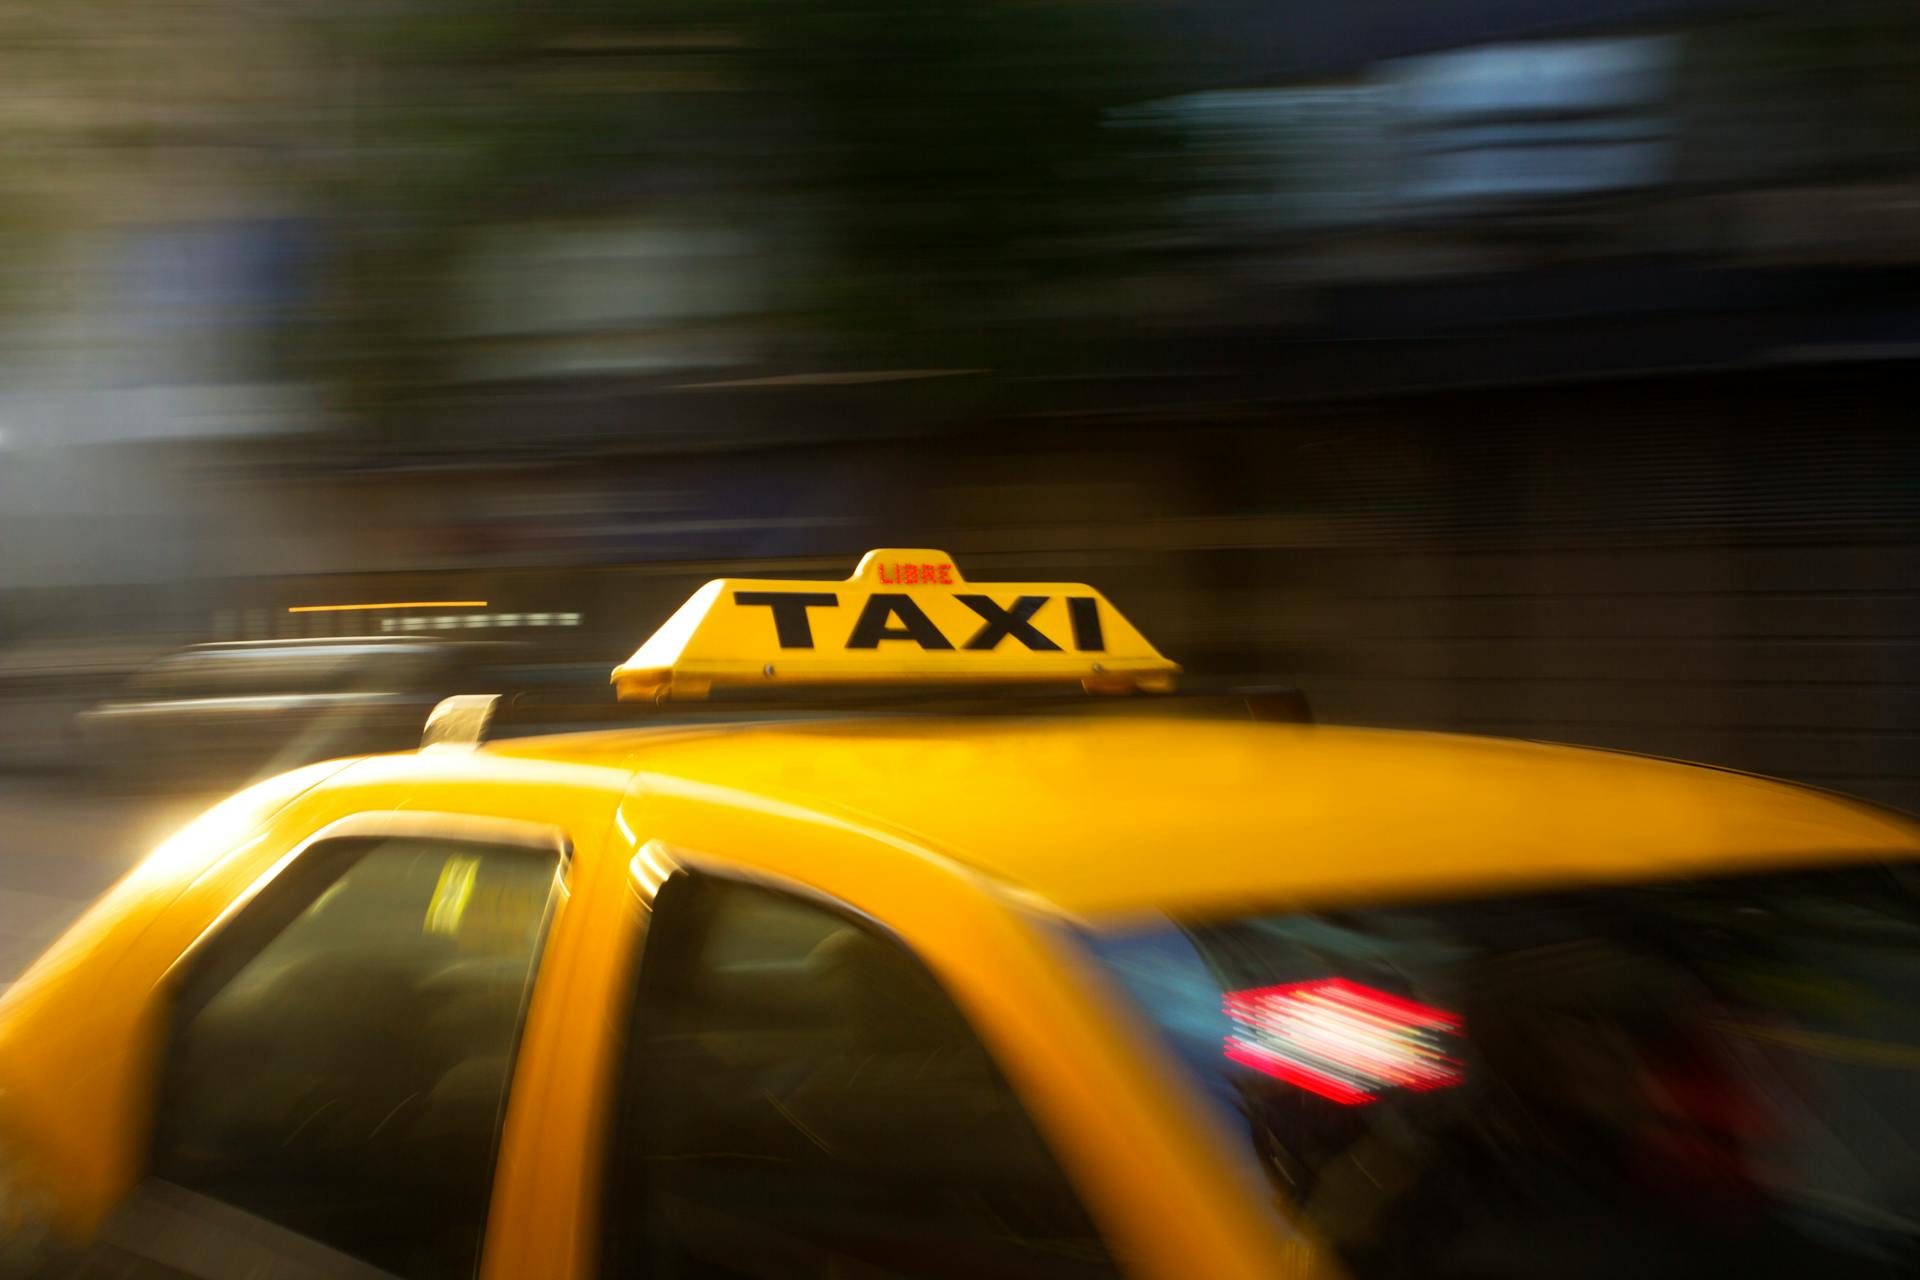 A yellow taxi cab | Source: Pexels